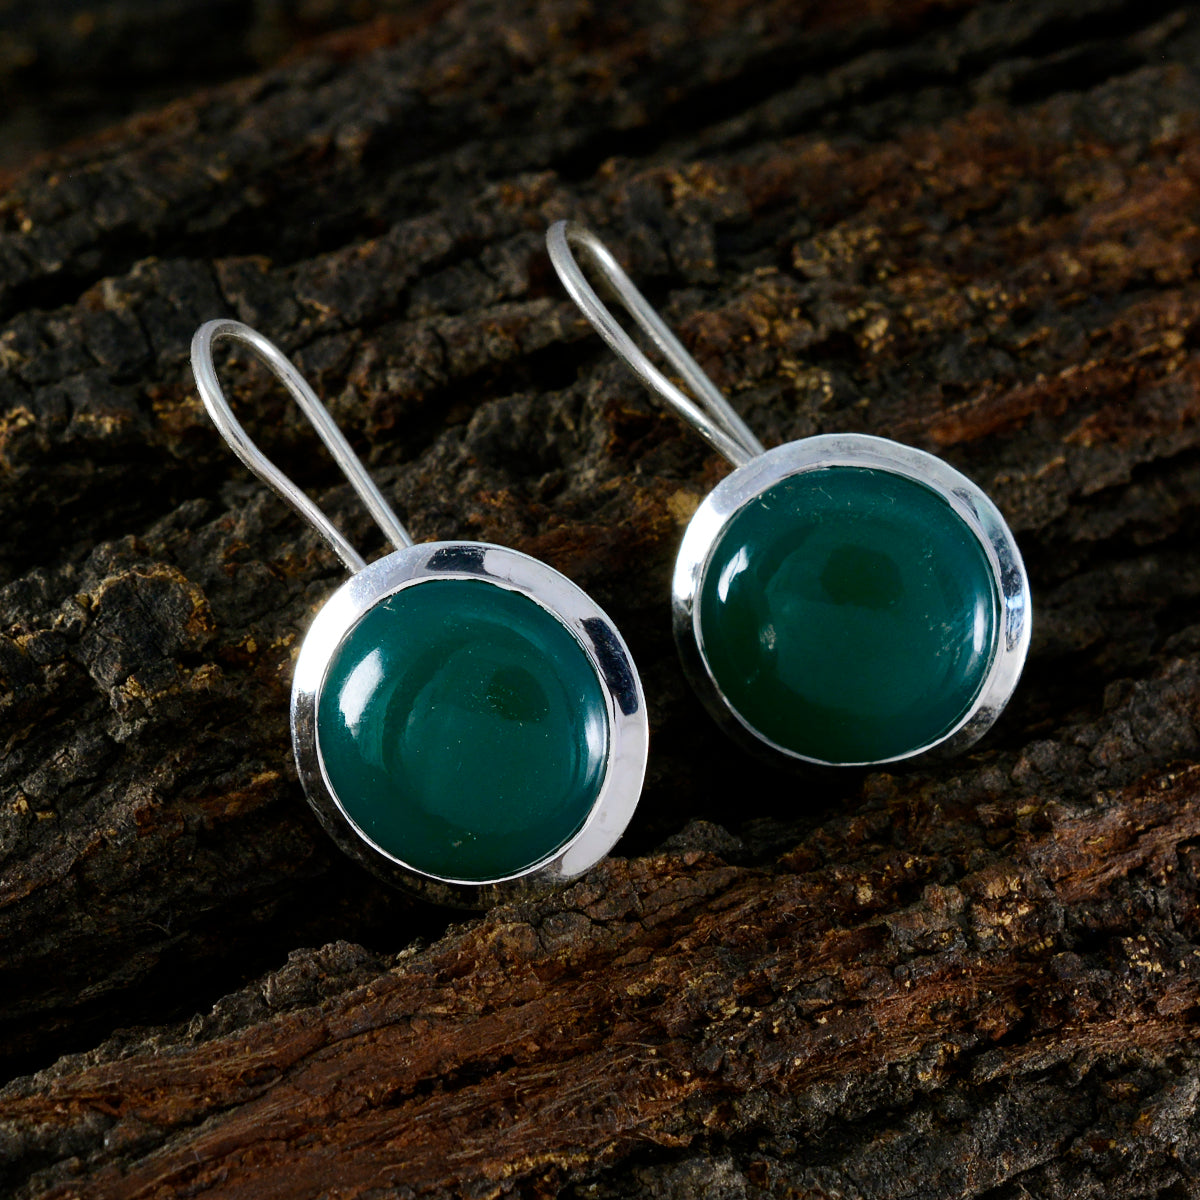 Riyo Stunning 925 Sterling Silver Earring For Femme Green Onyx Earring Bezel Setting Green Earring Dangle Earring